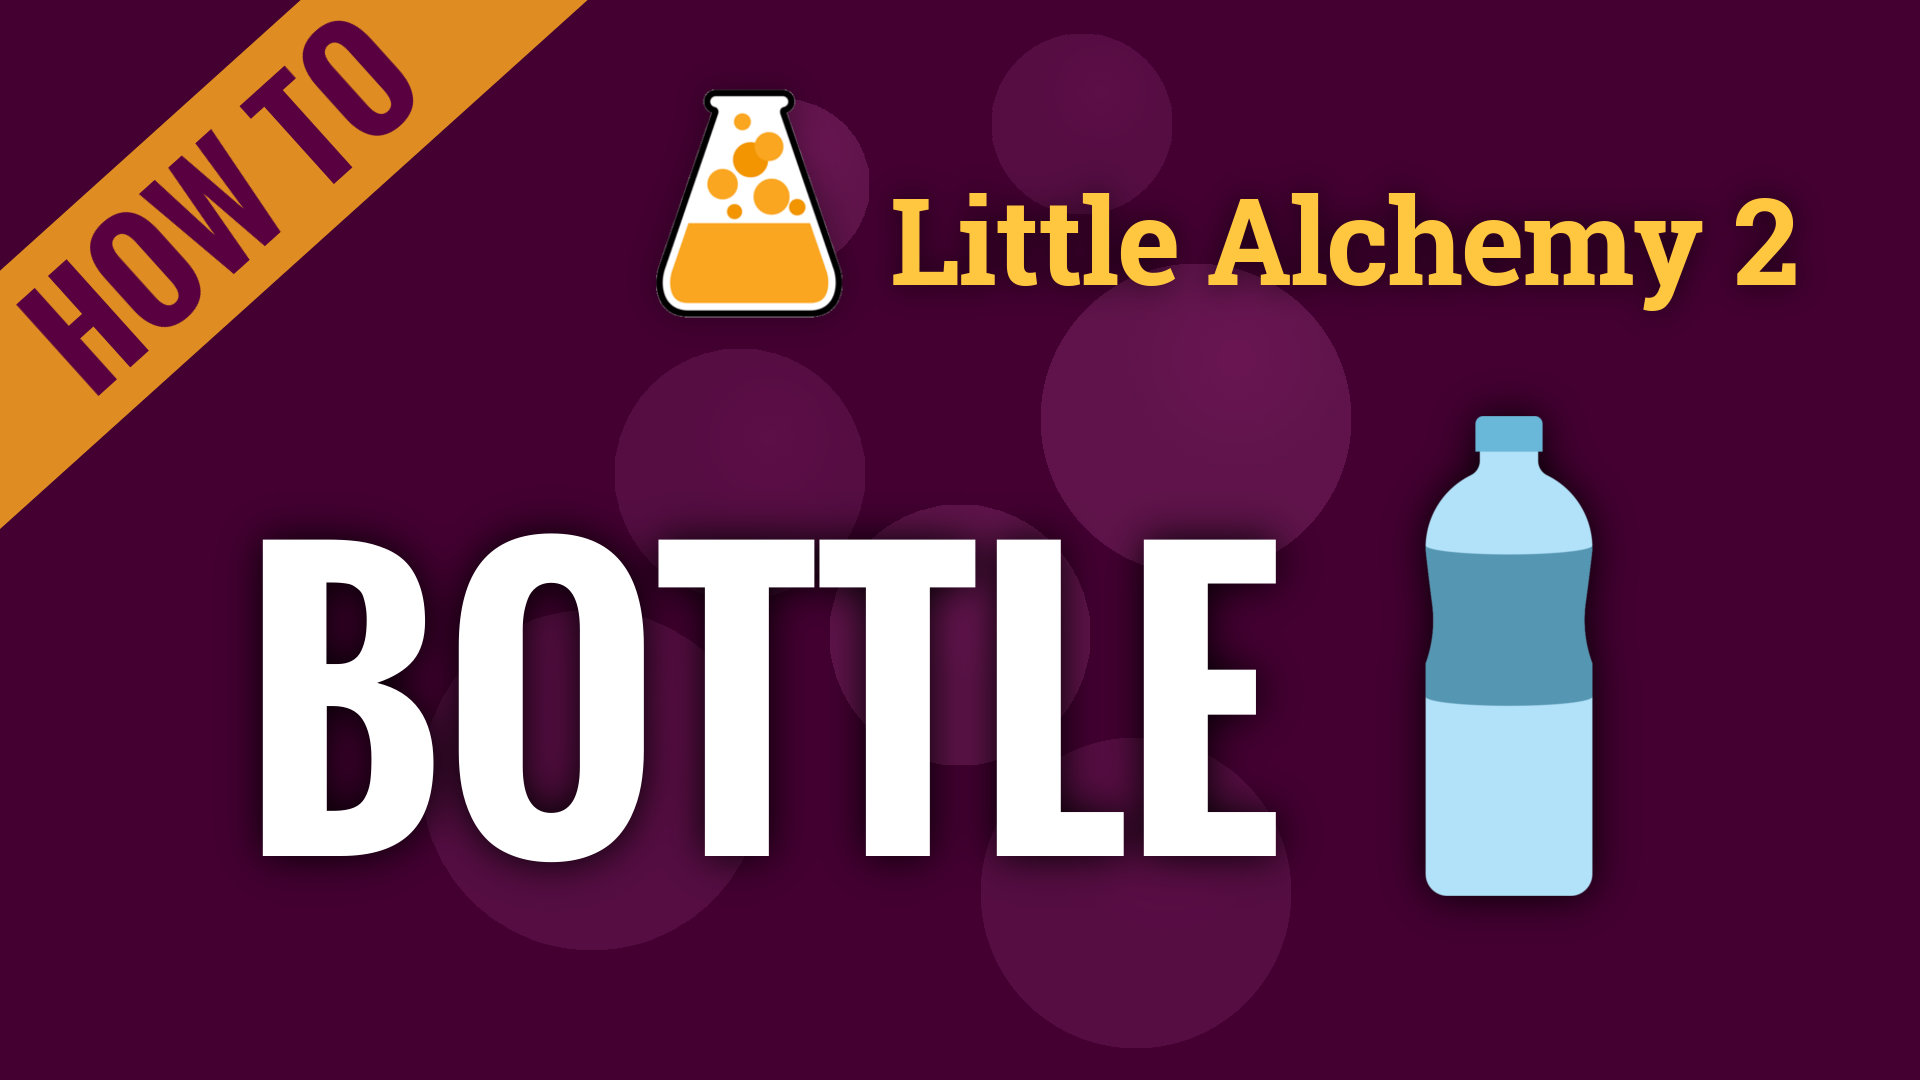 How To Make Bottle In Little Alchemy 2